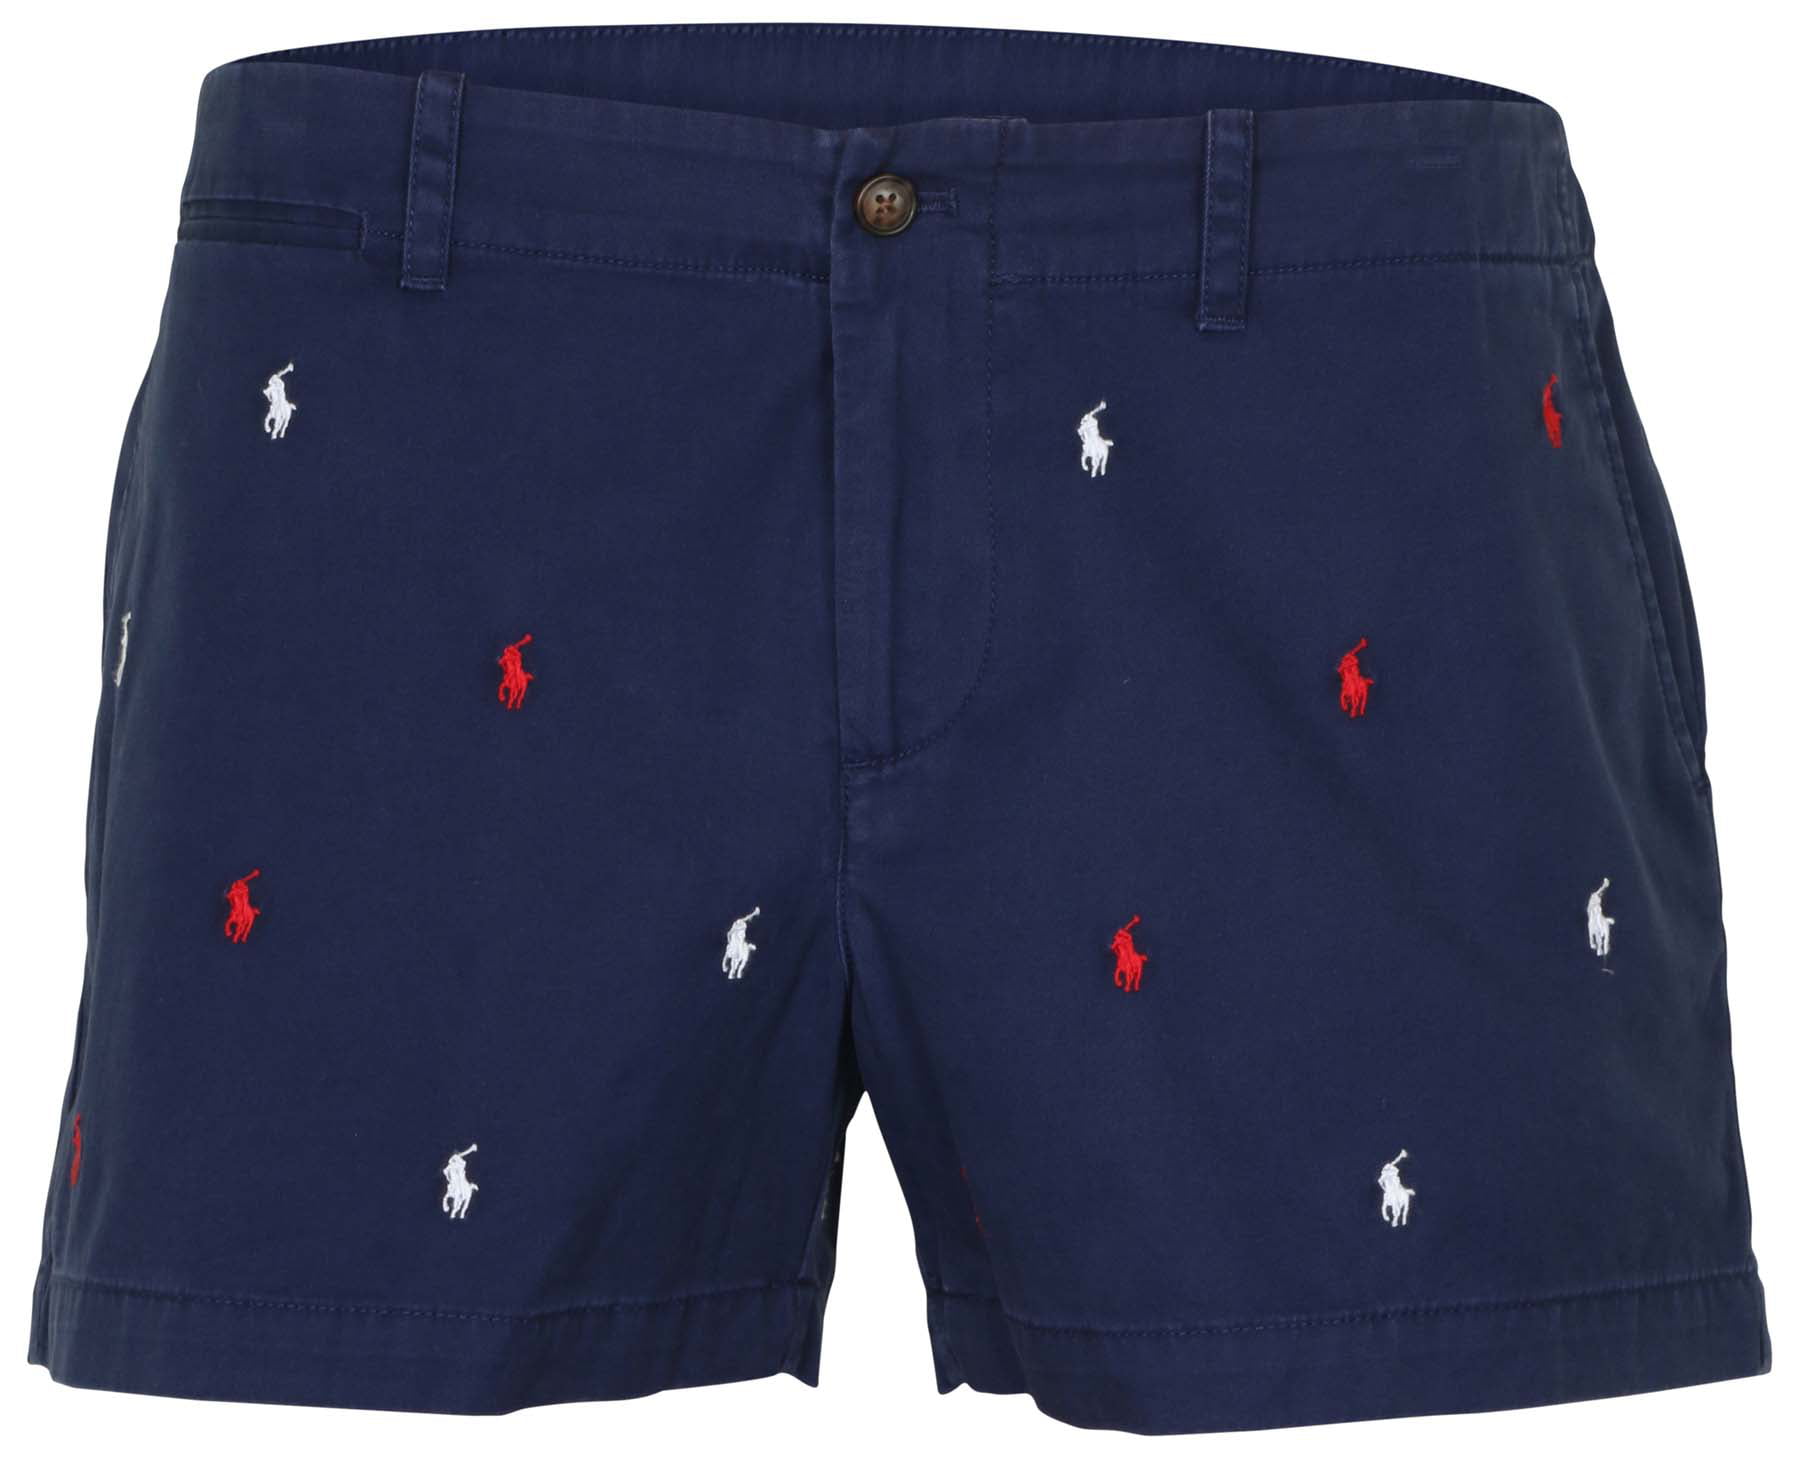 polo shorts with logo